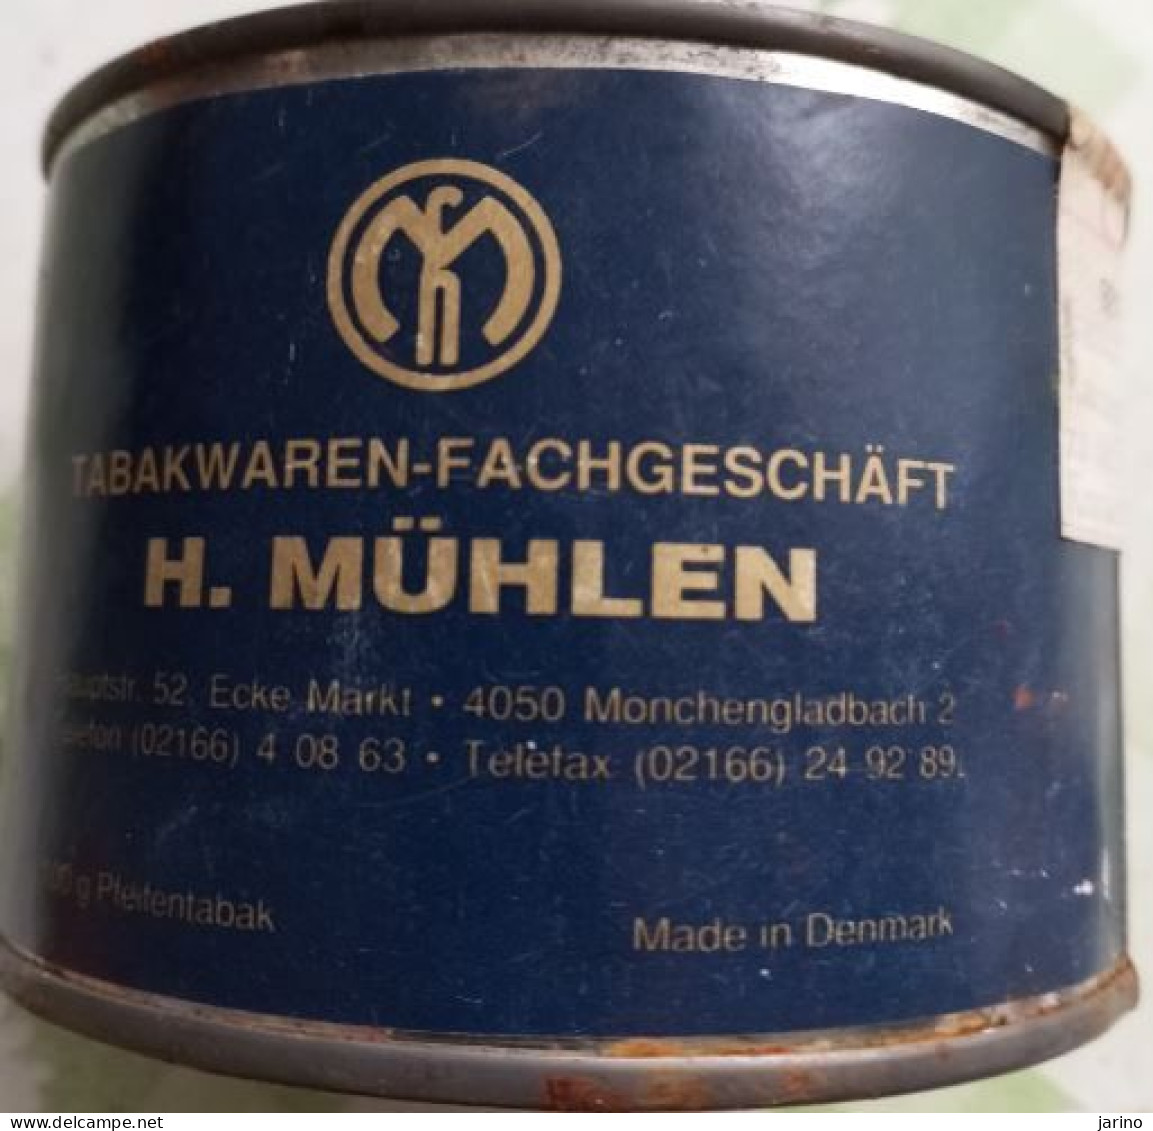 Ancient Empty Metal Tobacco Box Tabakwaren-Fachgeschäft H. MüHLEN, Made In Denmark, Average 10 Cm - Cajas Para Tabaco (vacios)